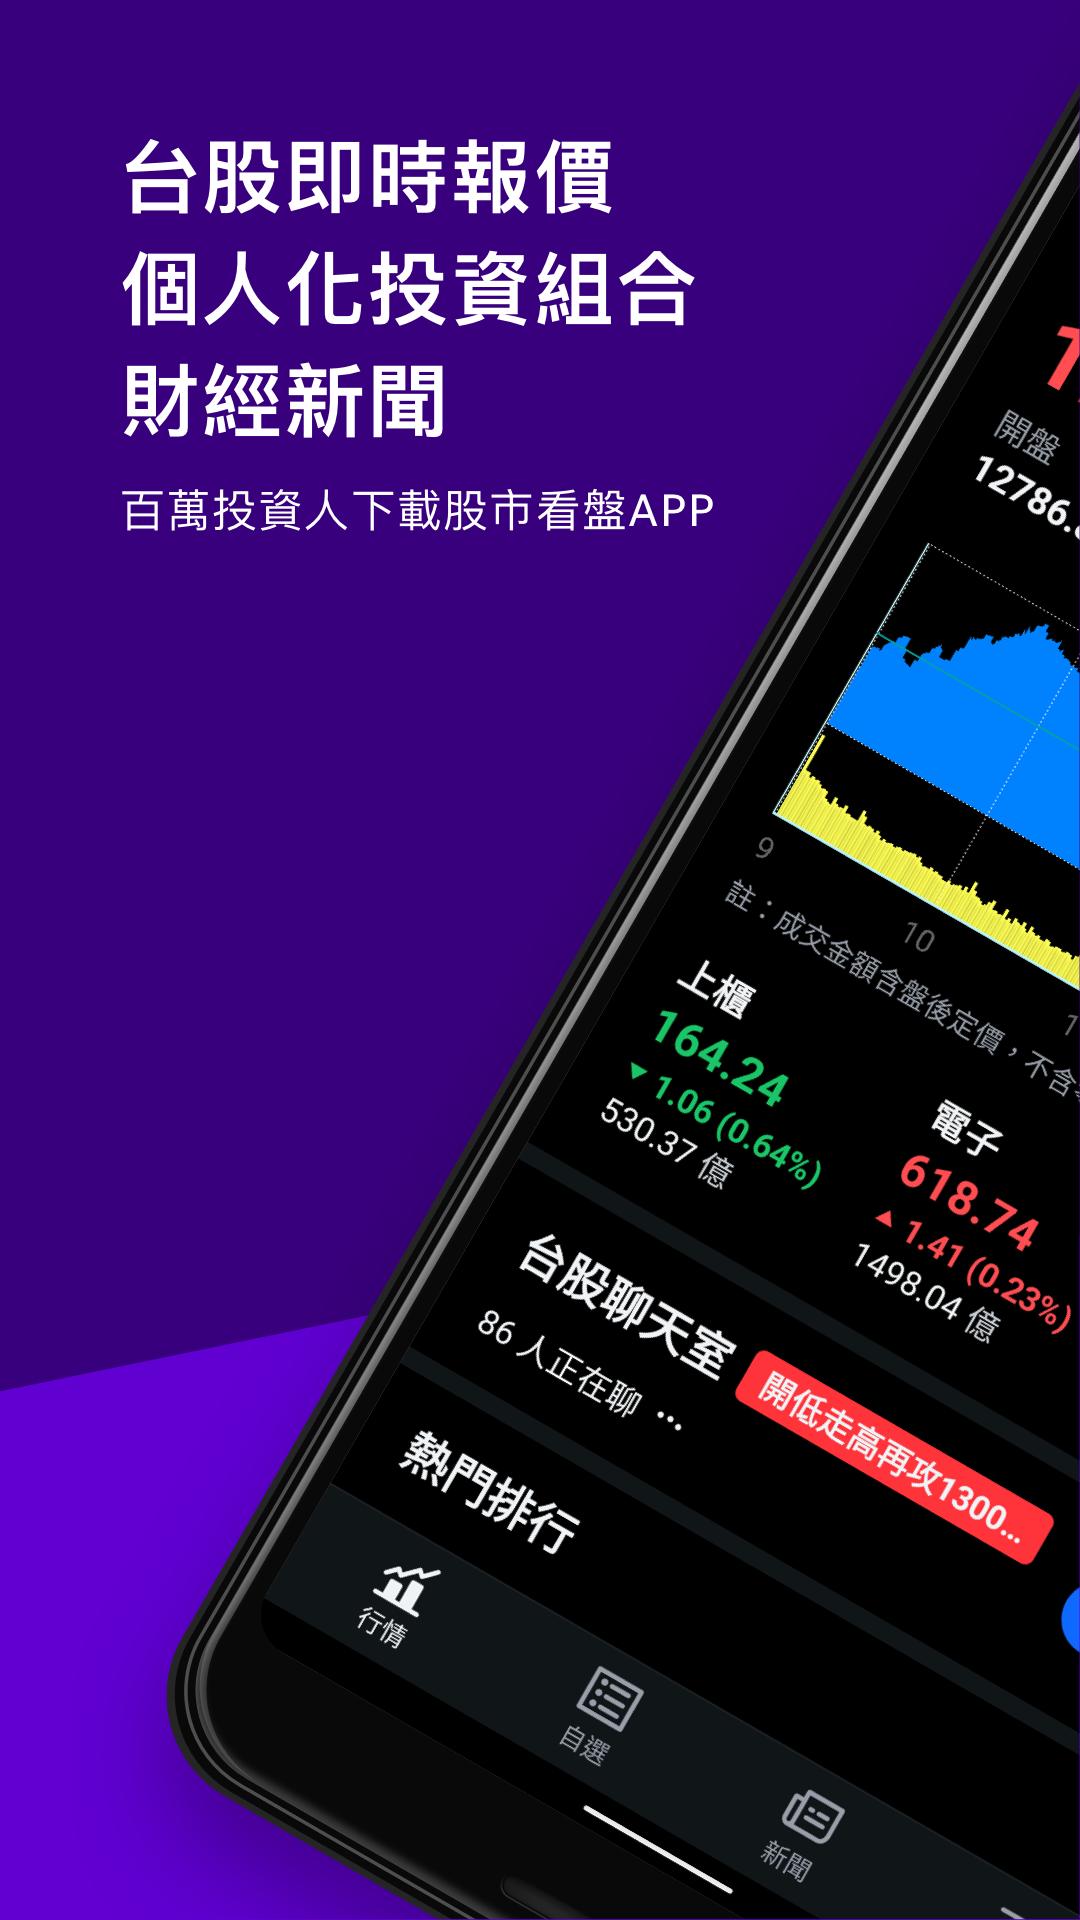 Yahoo奇摩股市– 台股即時報價 個人化股票投資組合及財經新聞 外匯走勢 行動理財App 2.10.1 Screenshot 1